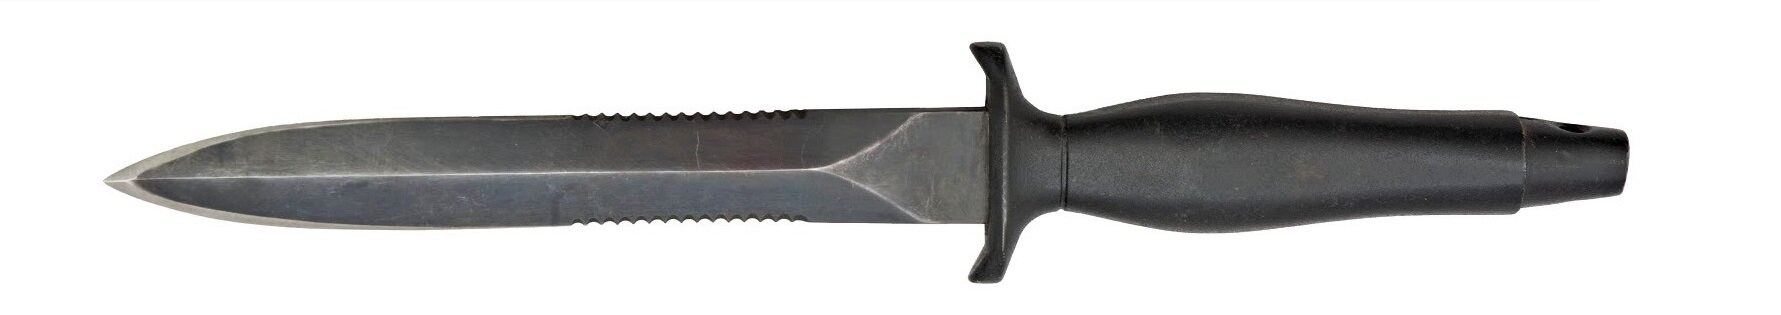 The KA-BAR KNIFE by Tyr Neilsen — ACADEMY of VIKING MARTIAL ARTS